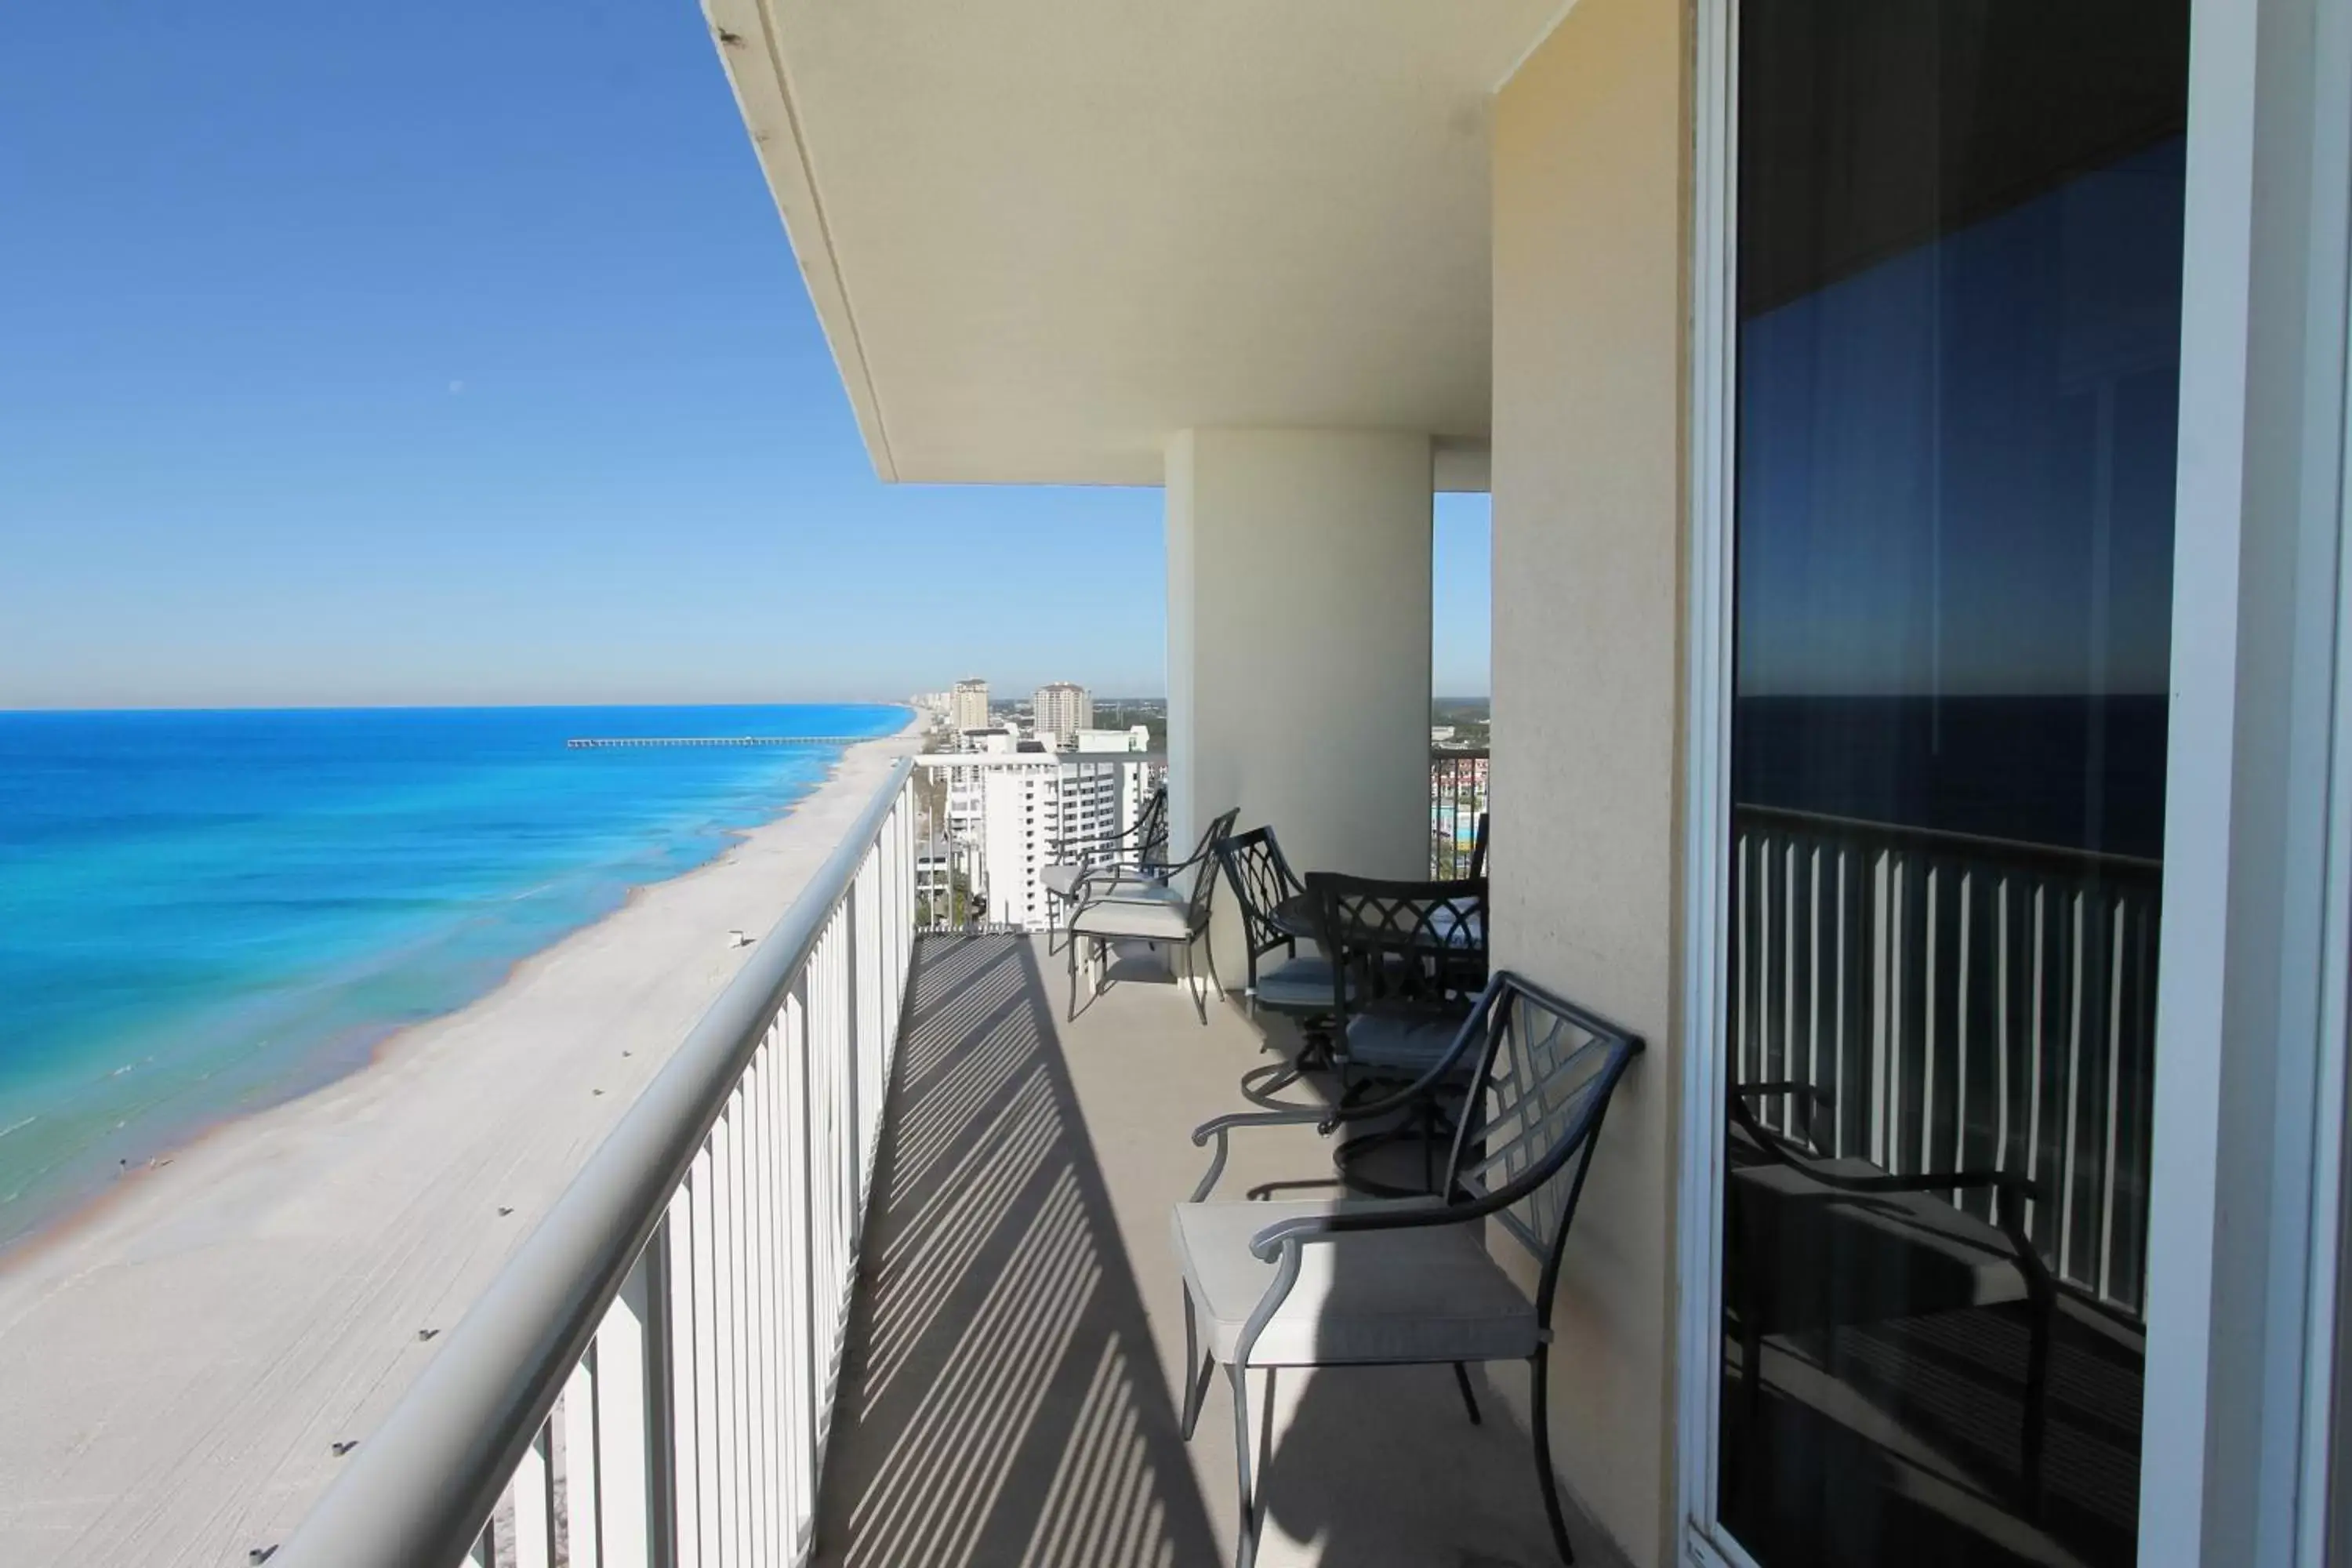 Balcony/Terrace in Majestic Beach Resort, Panama City Beach, Fl